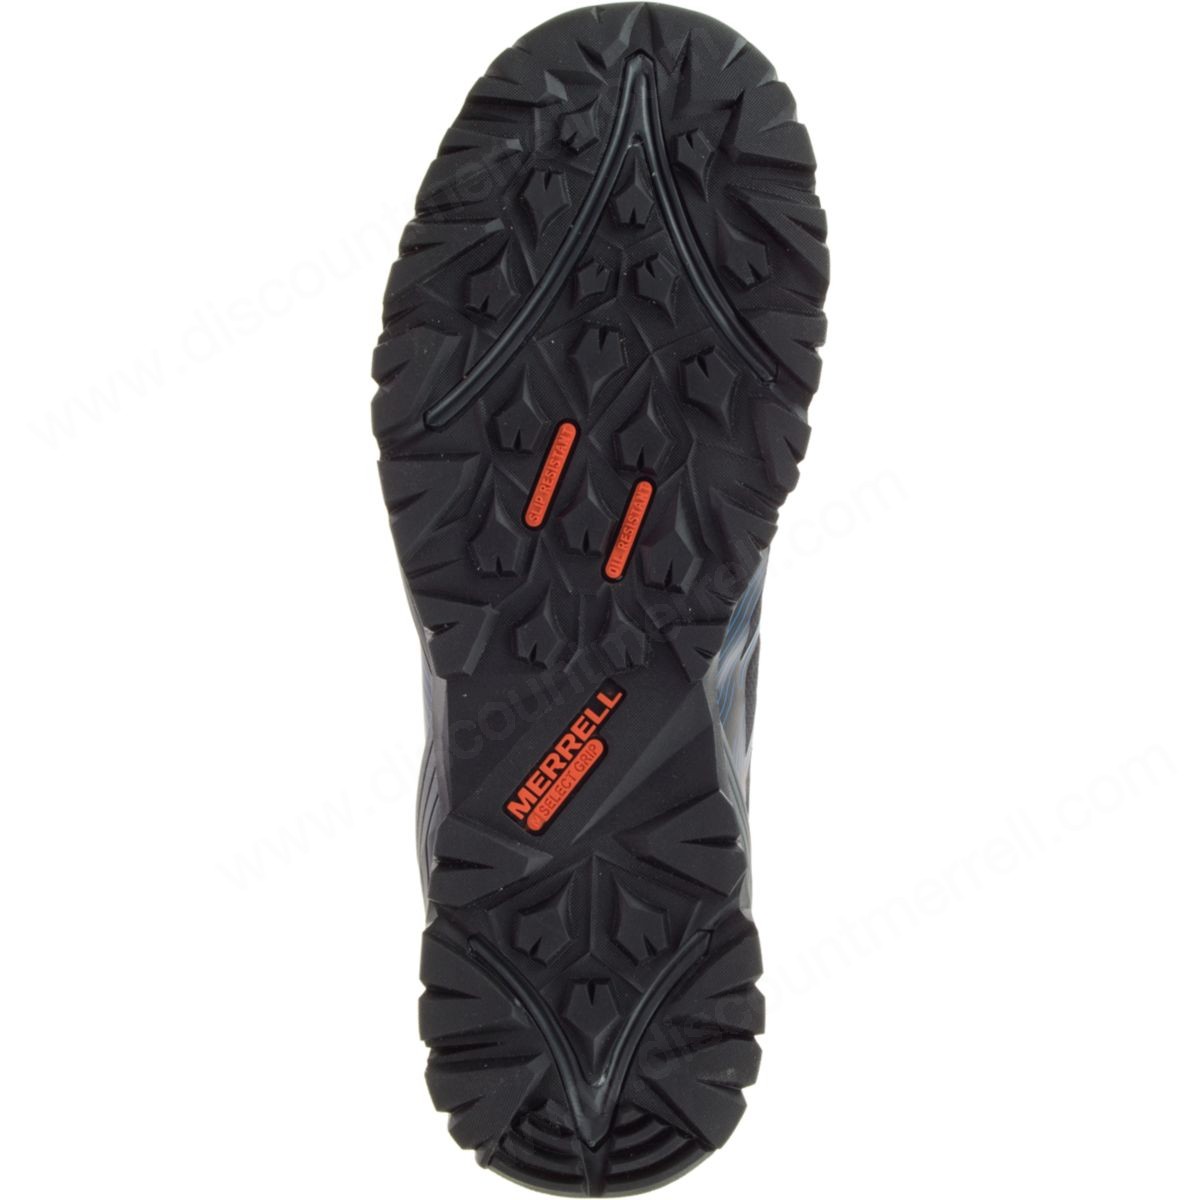 Merrell Man's Fullbench Comp Toe Work Shoe Black - -1